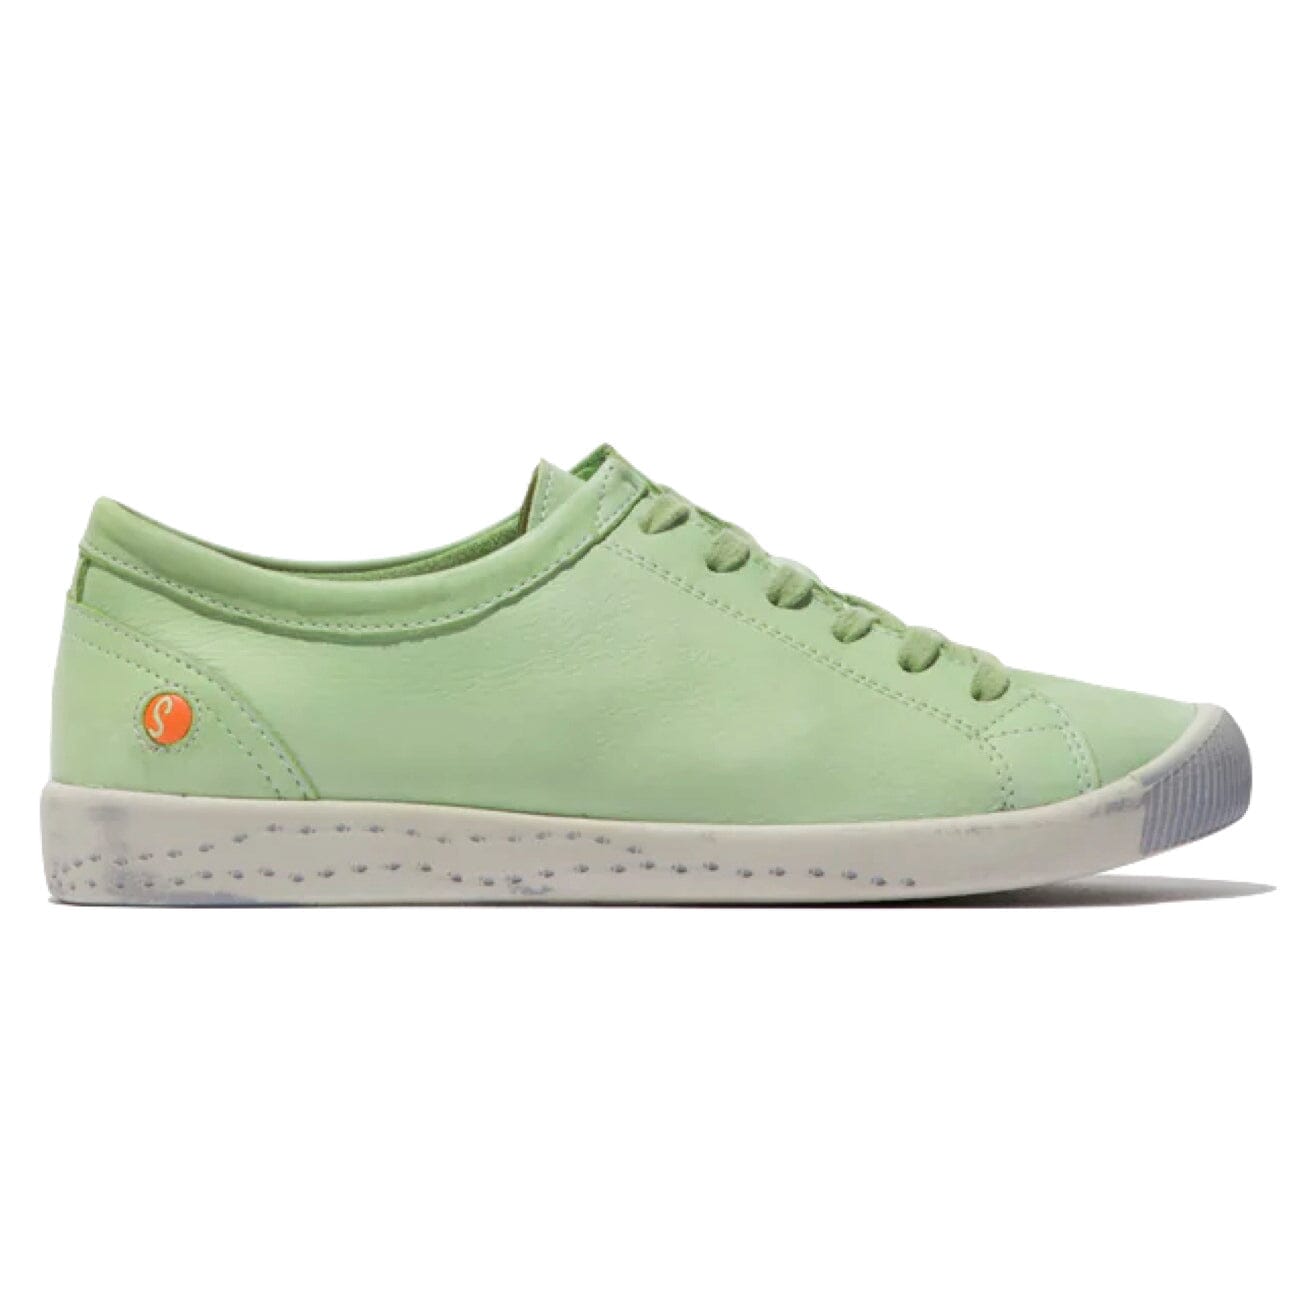 Softinos, Isla154, Laceup Shoe, Washed Leather, Light Green Shoes Softinos Light Green 36 